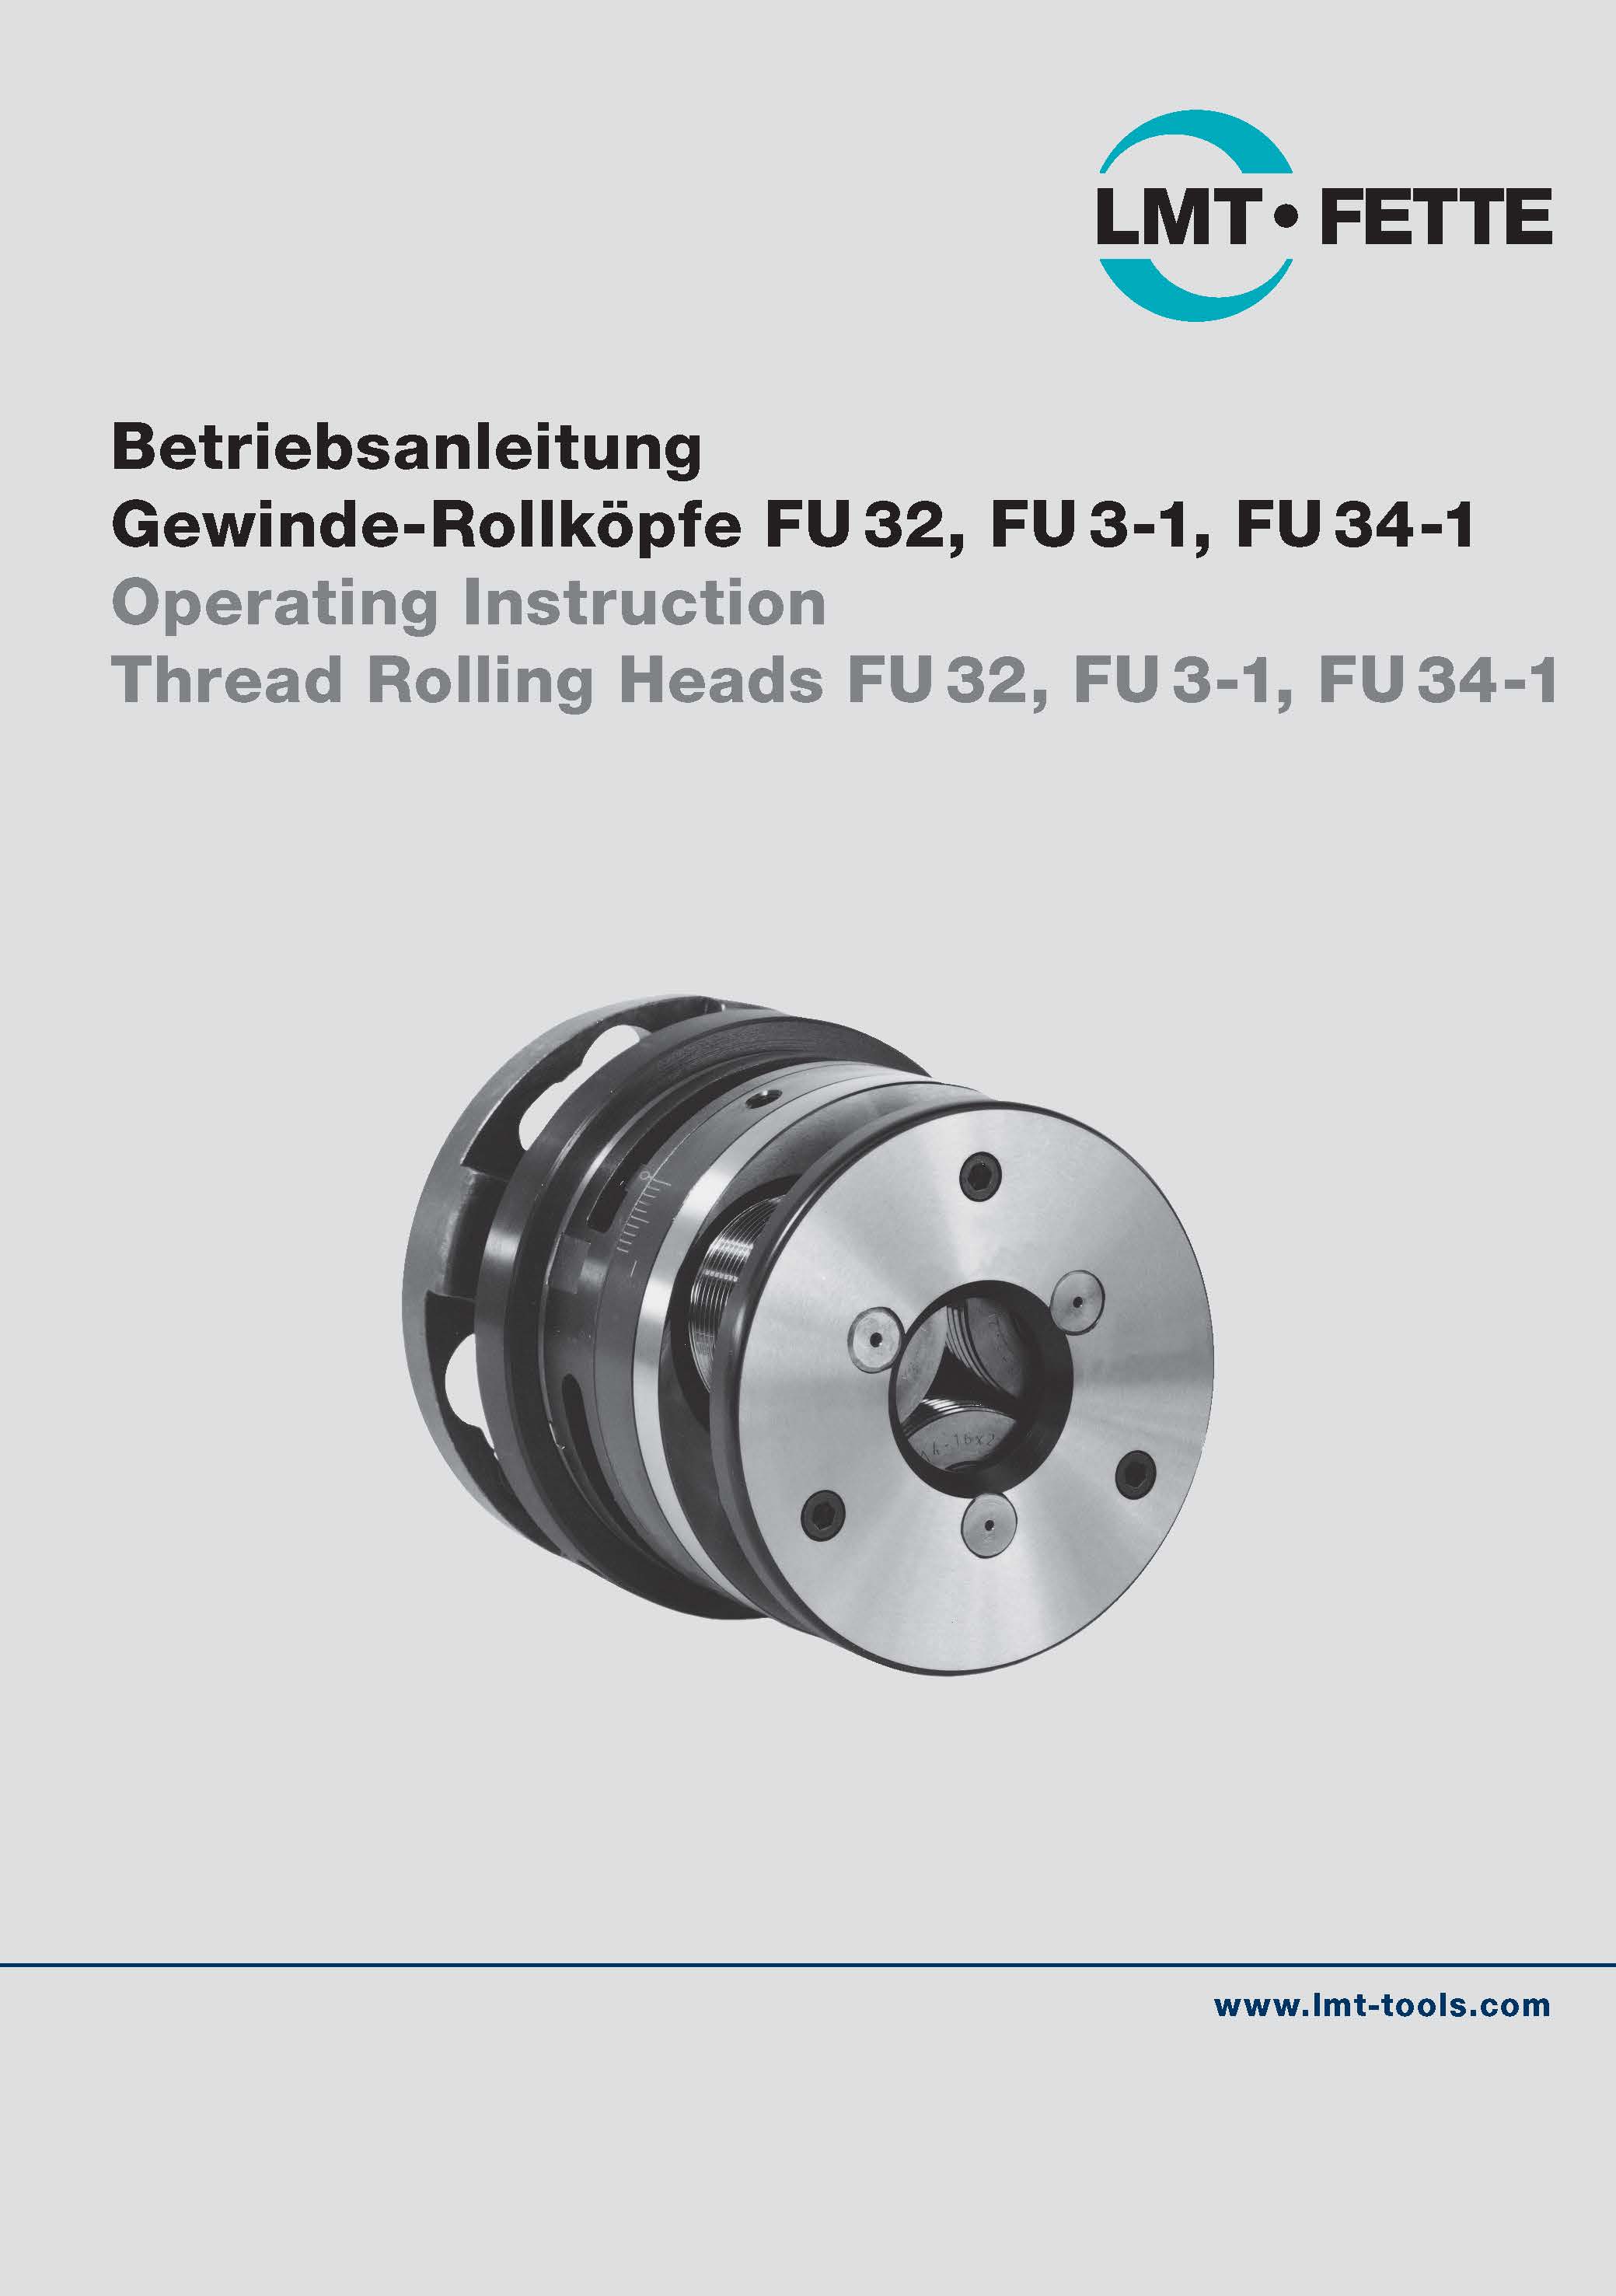 Operating Instruction Thread Rolling Heads FU 32-34